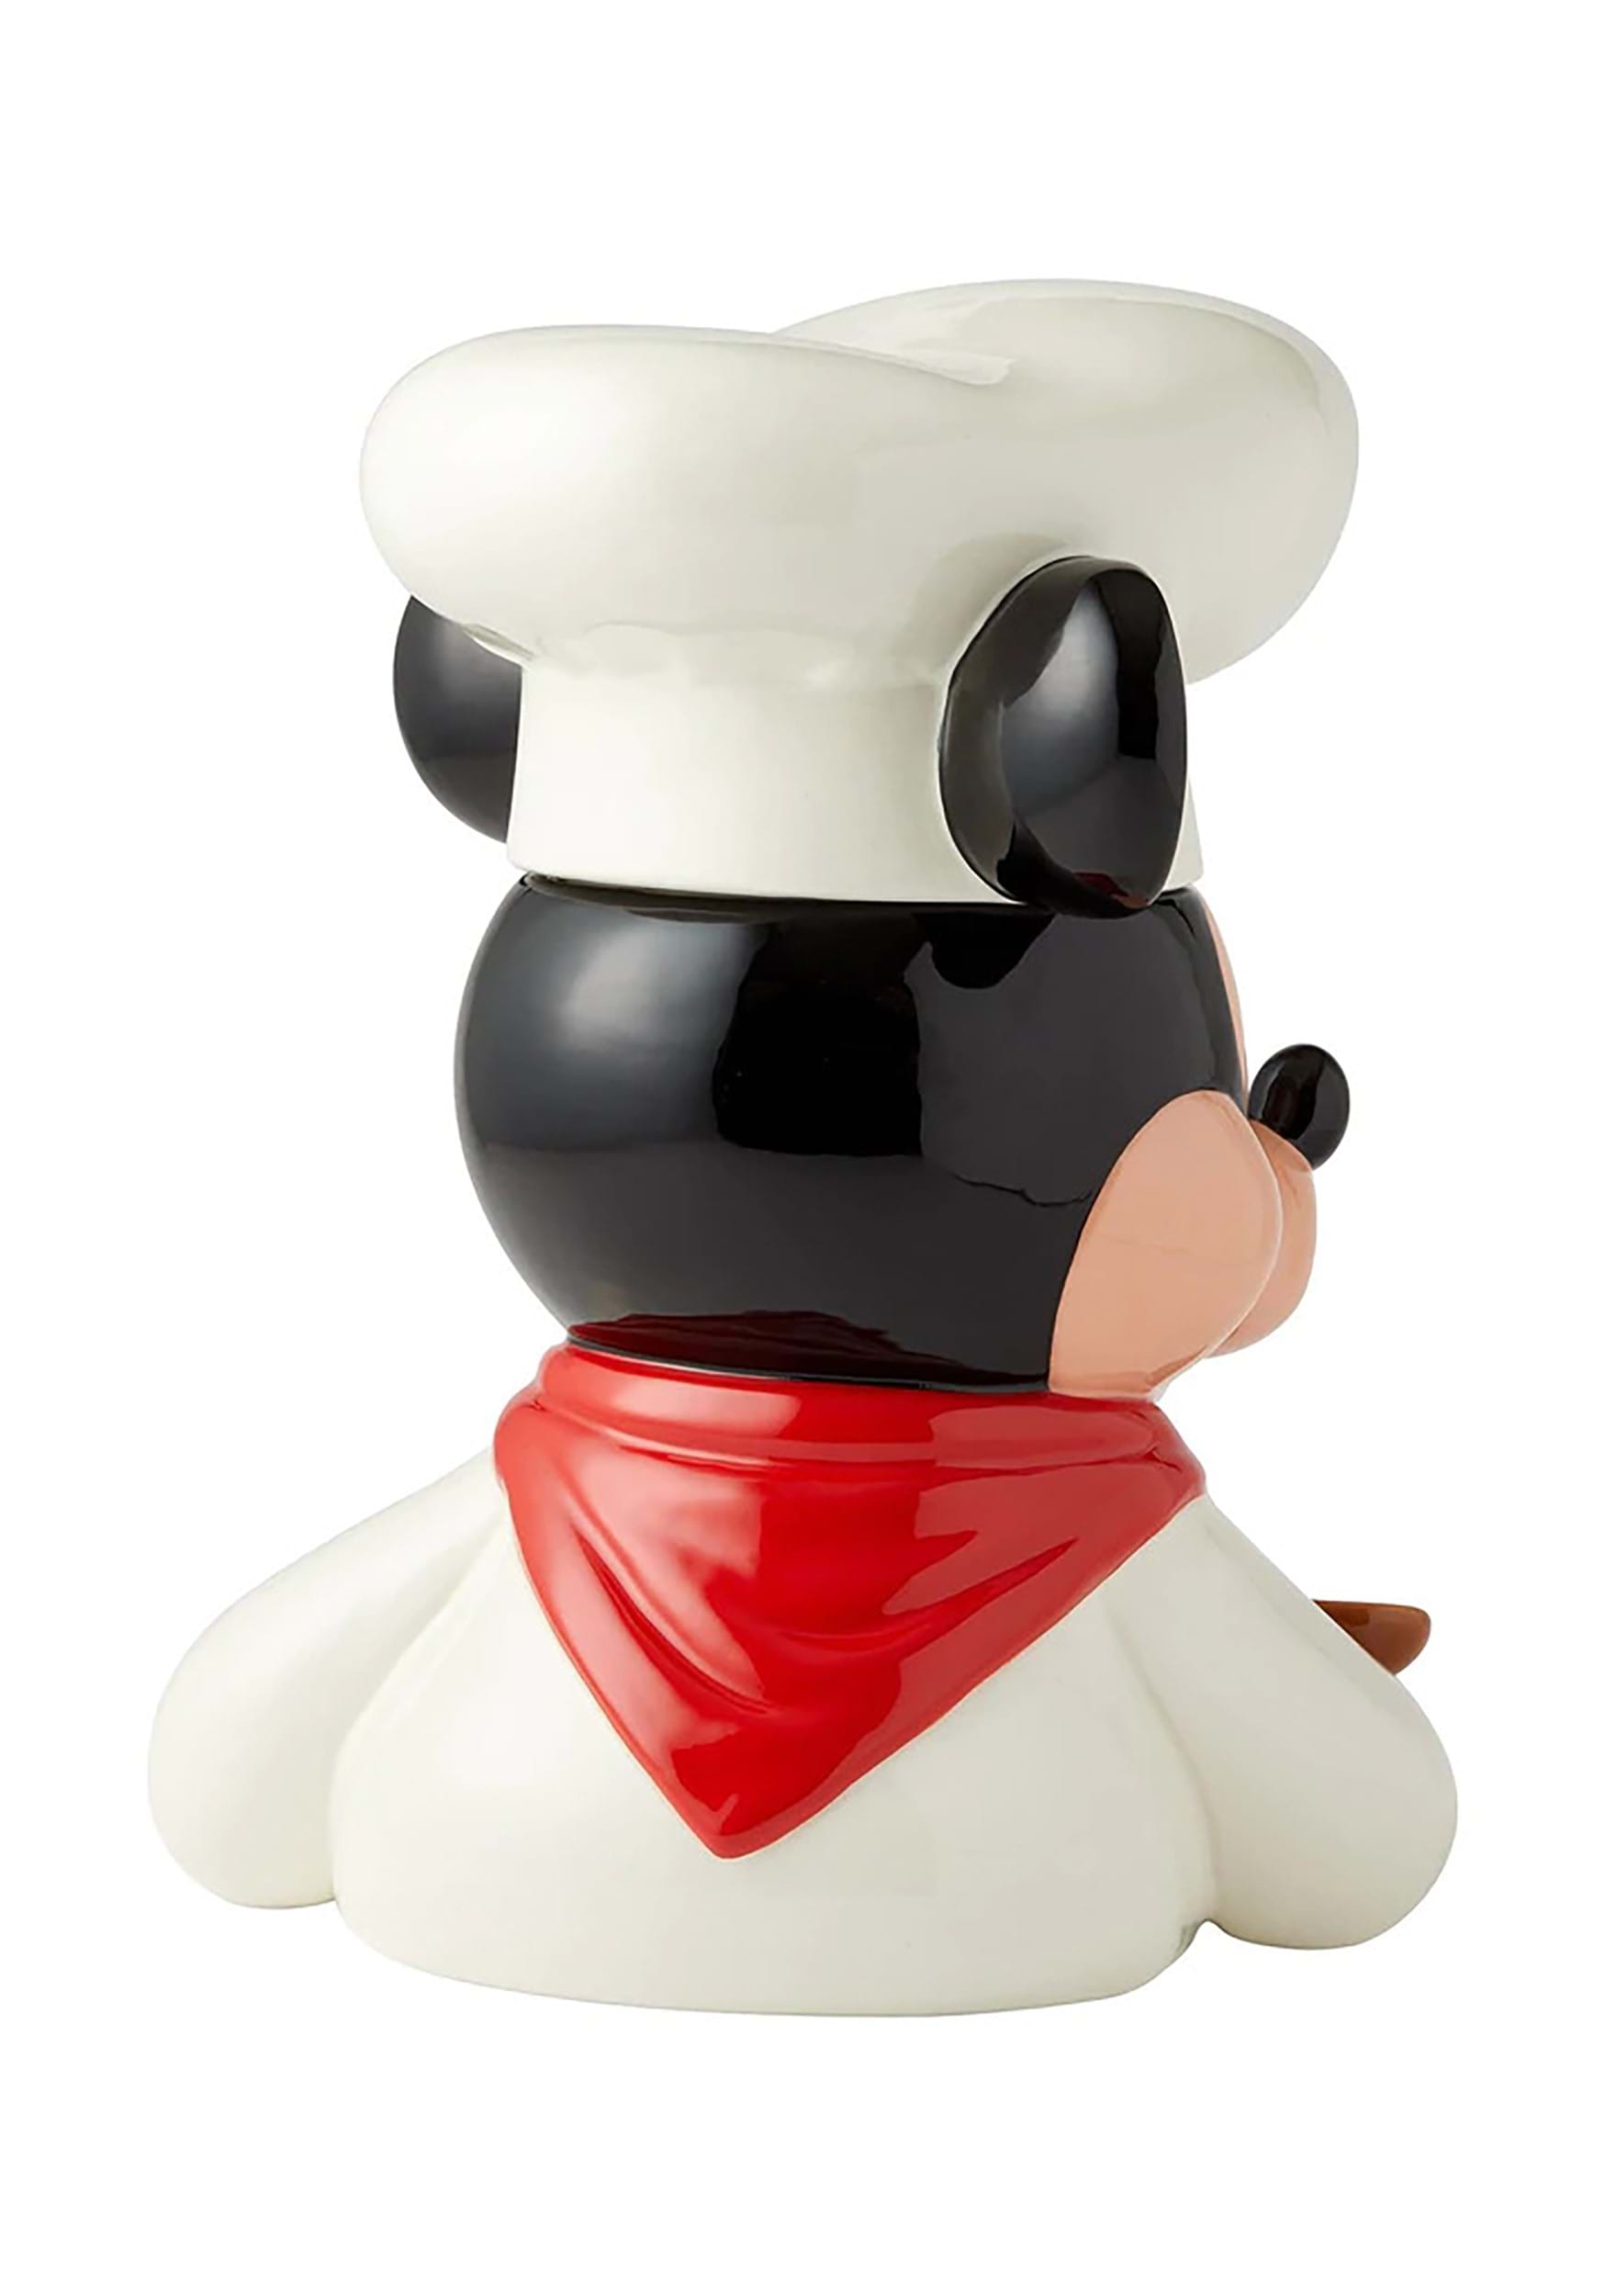 Disney Chef Mickey Cookie Jar